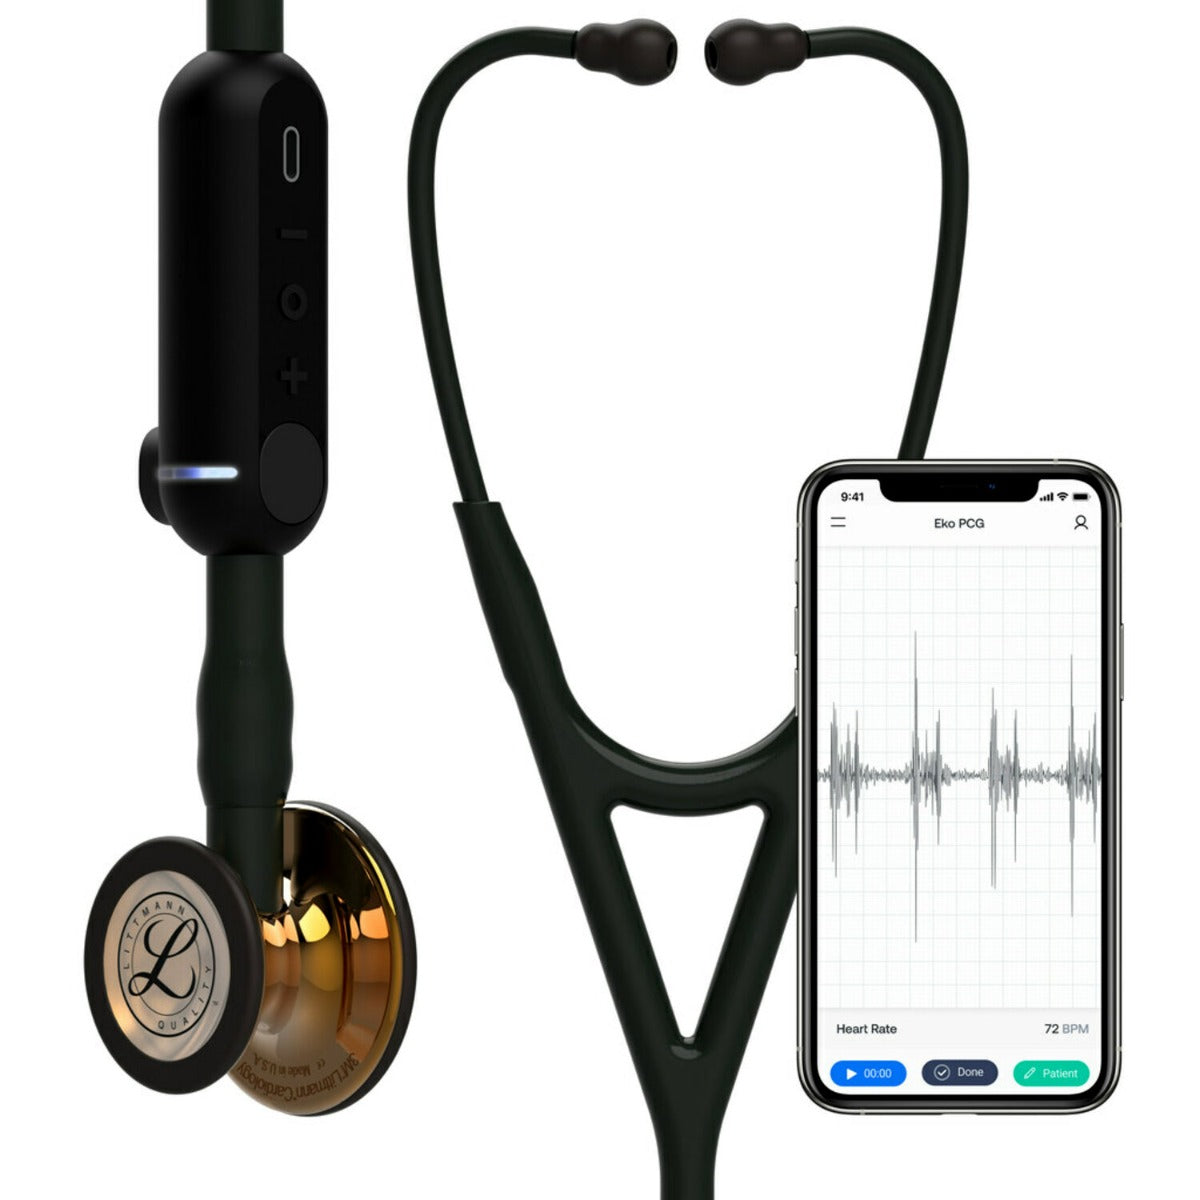 E-Scope II Belt Model Stethoscope with Oversized Headphones